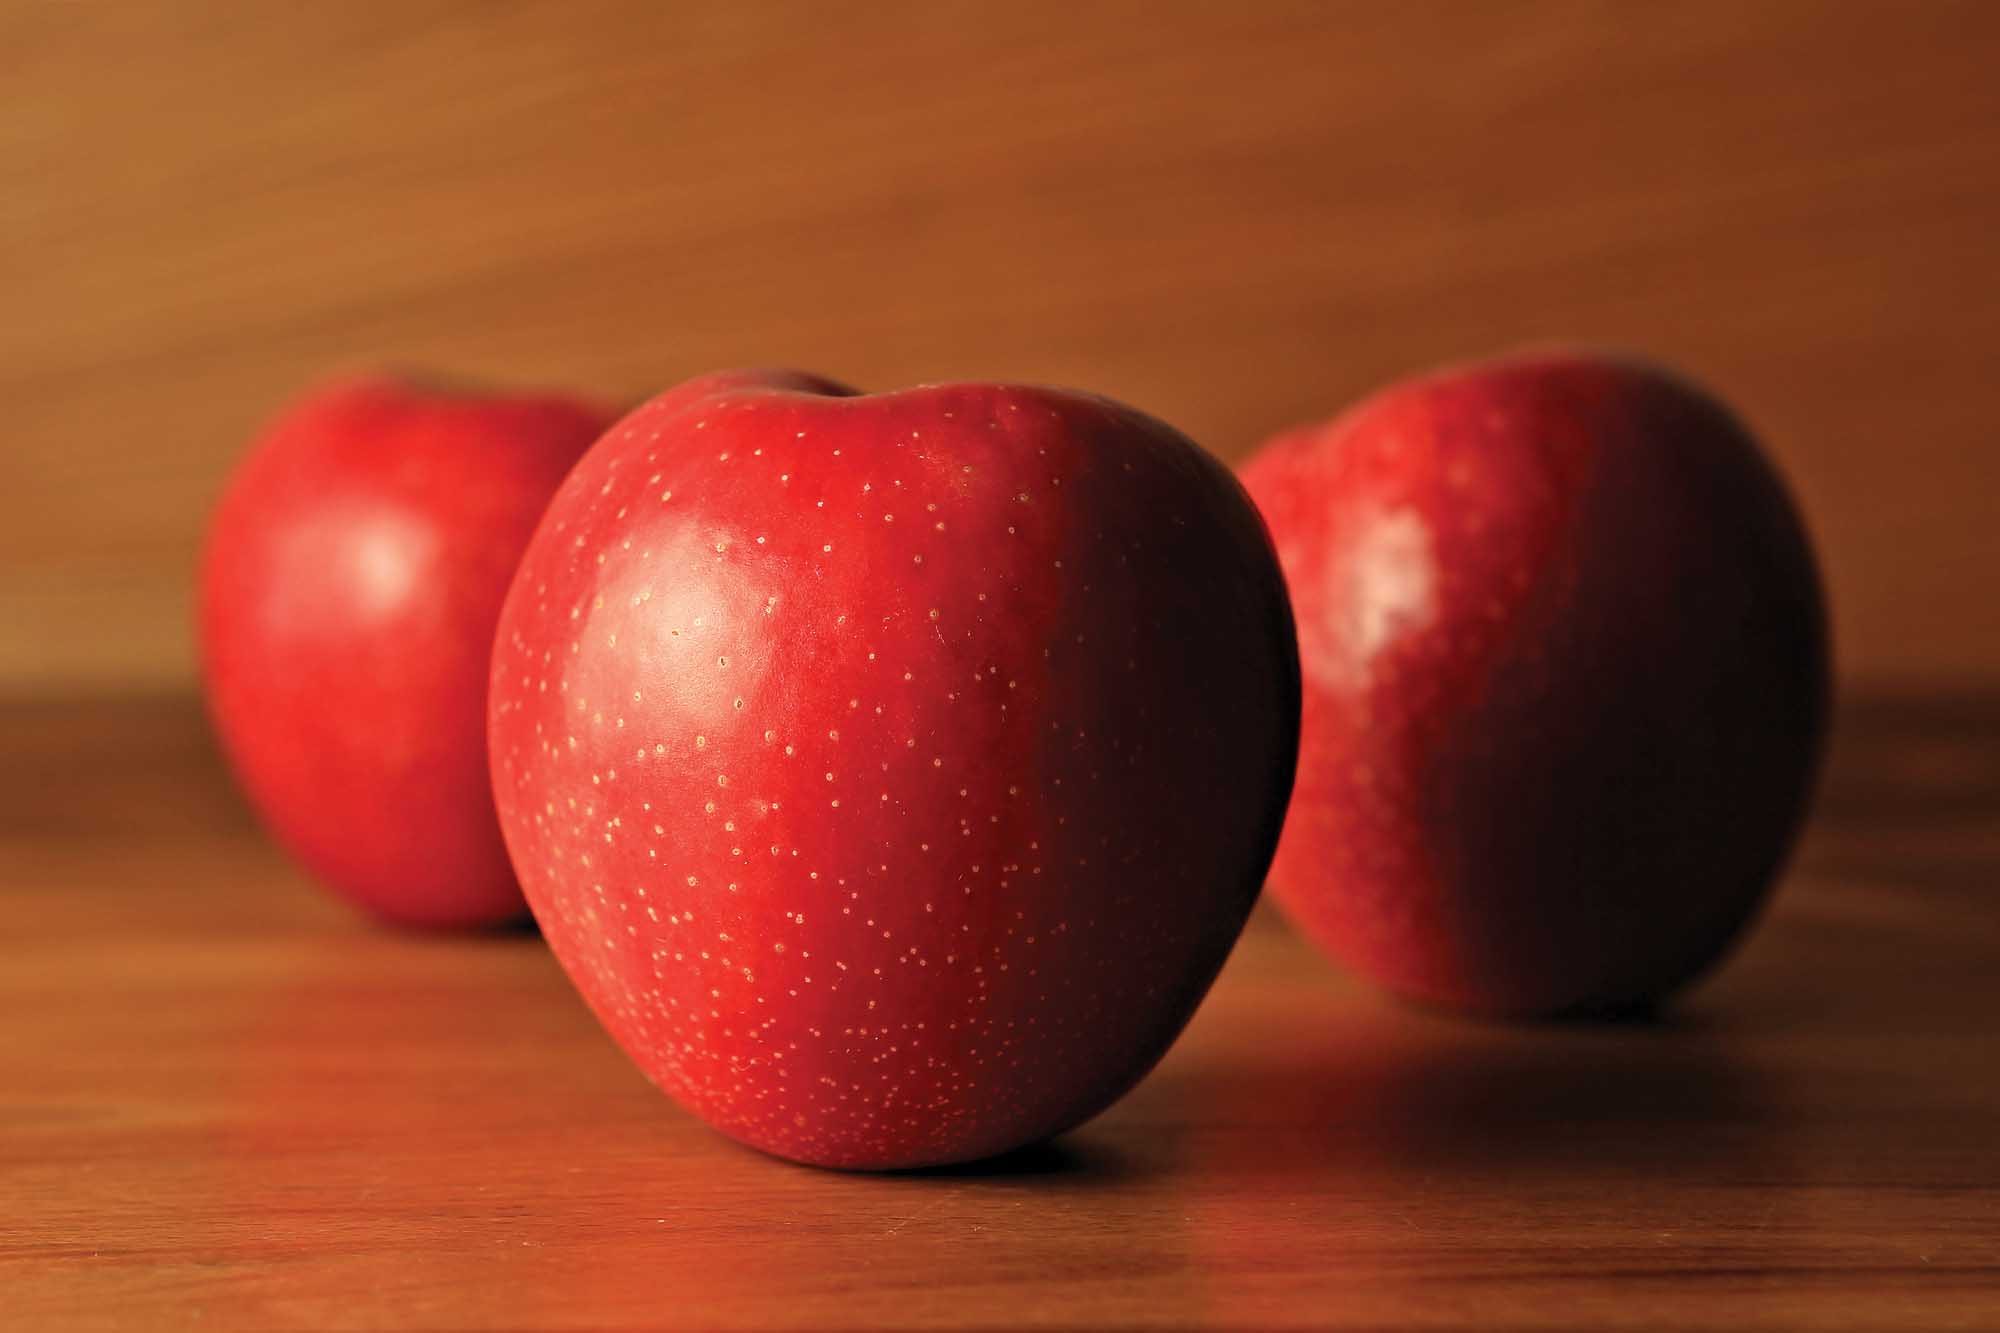 Storage supplies of SweeTango apples should last through July”